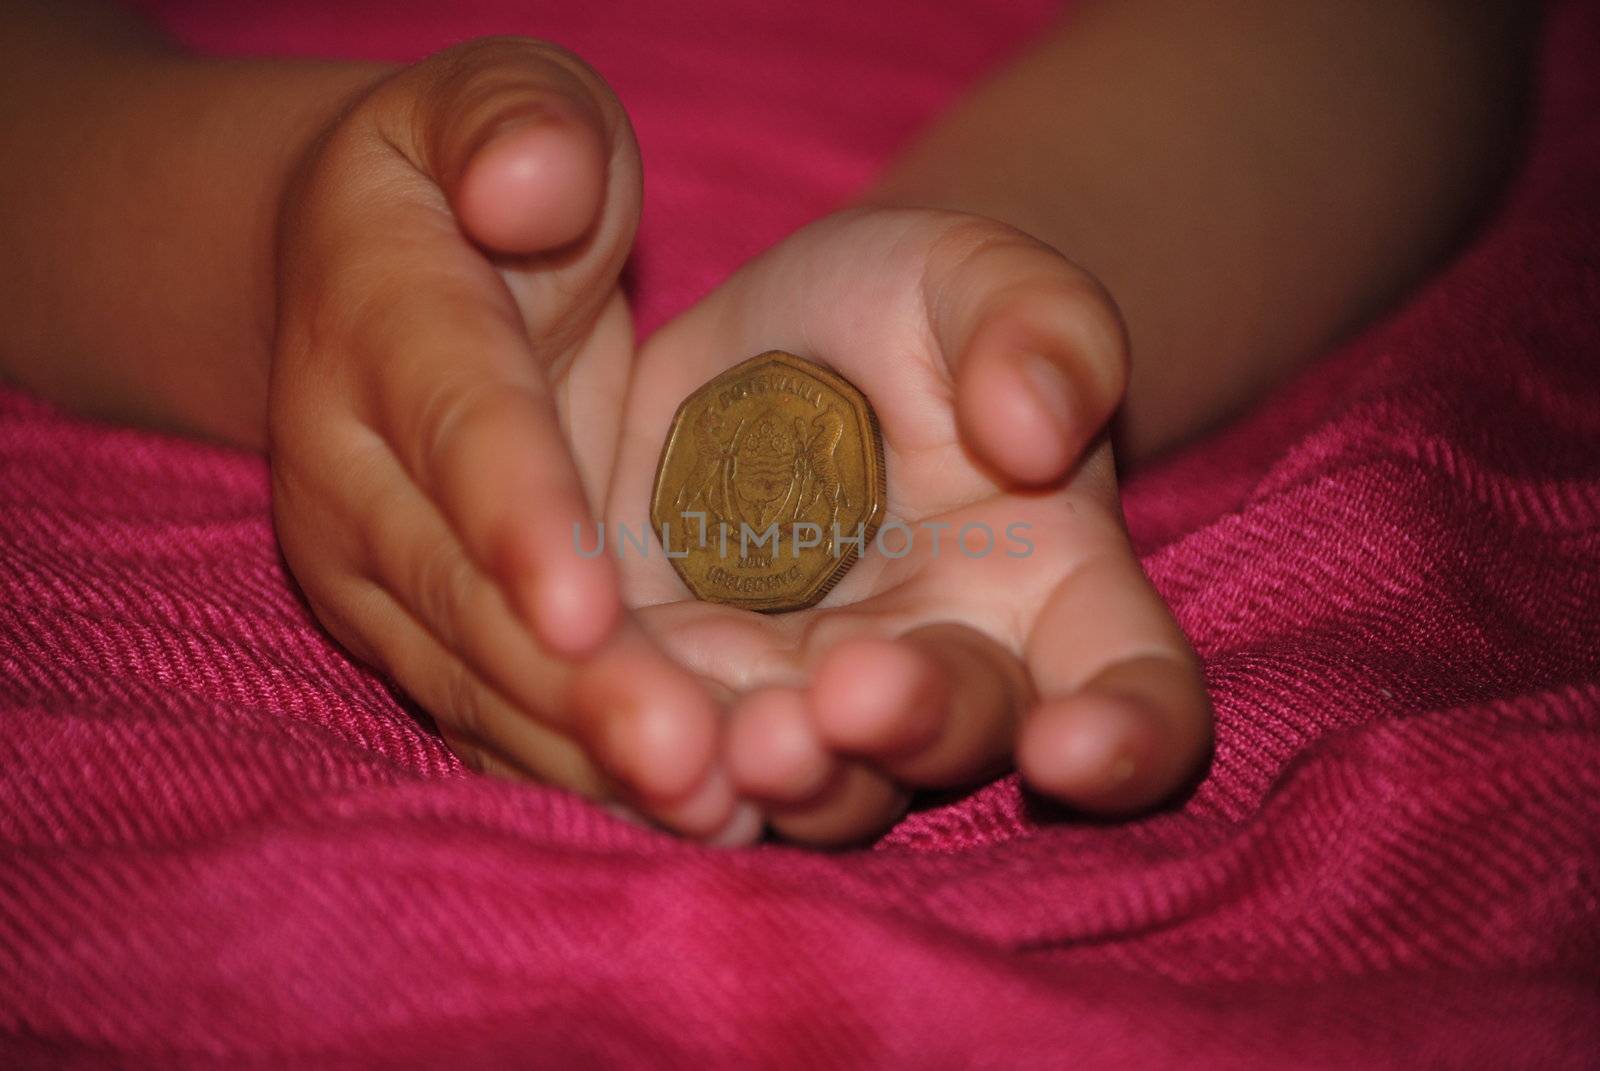 boswanian coin by viviolsen